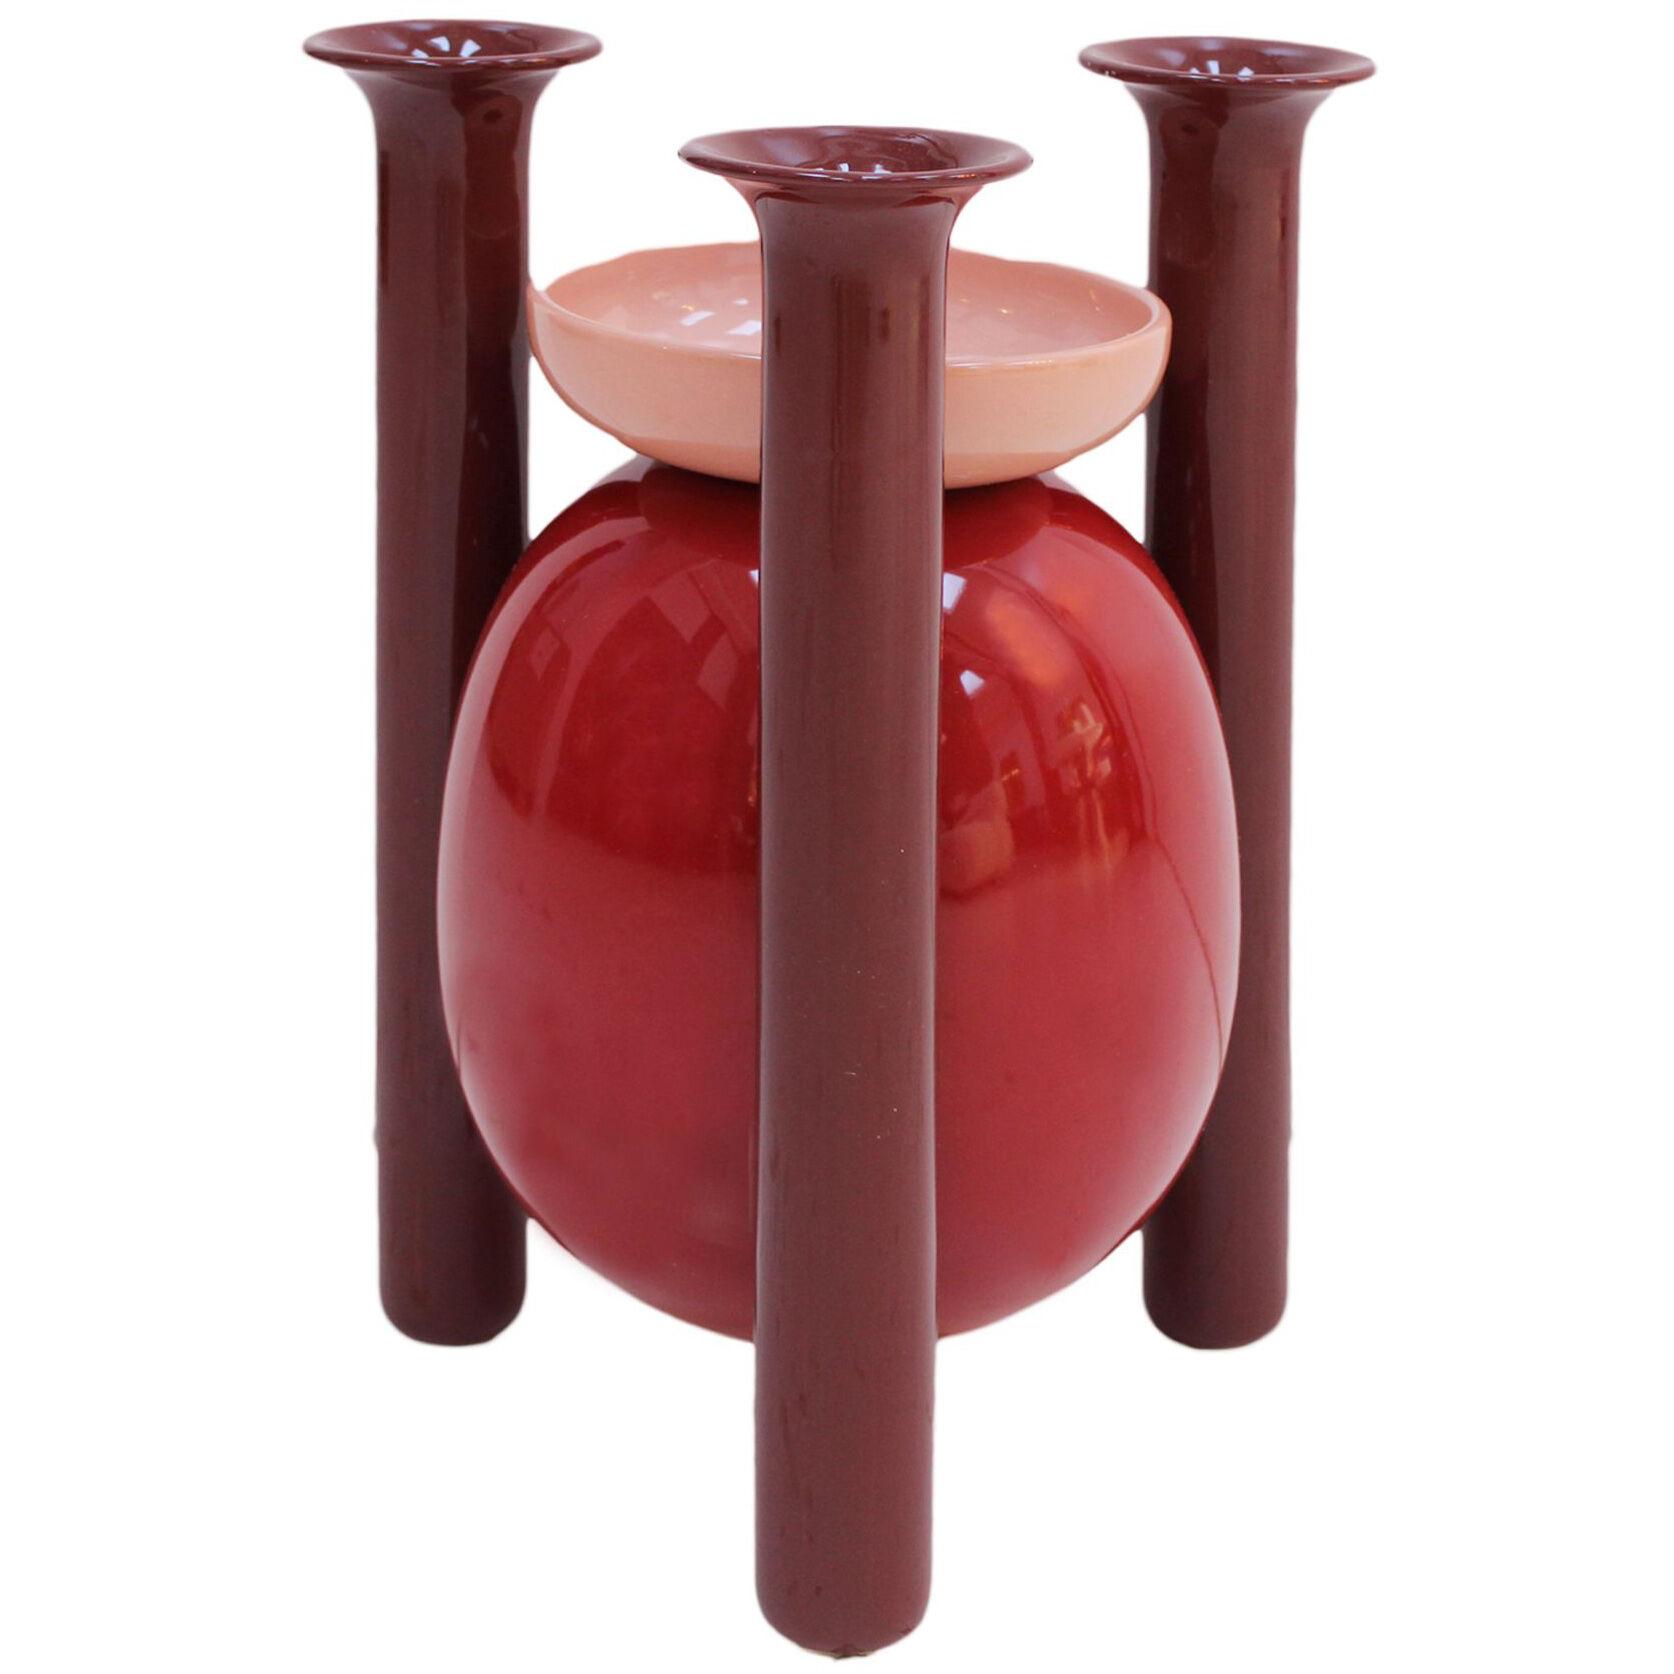 Contemporary Vases Made of Ceramic Designed By Jaime Hayón